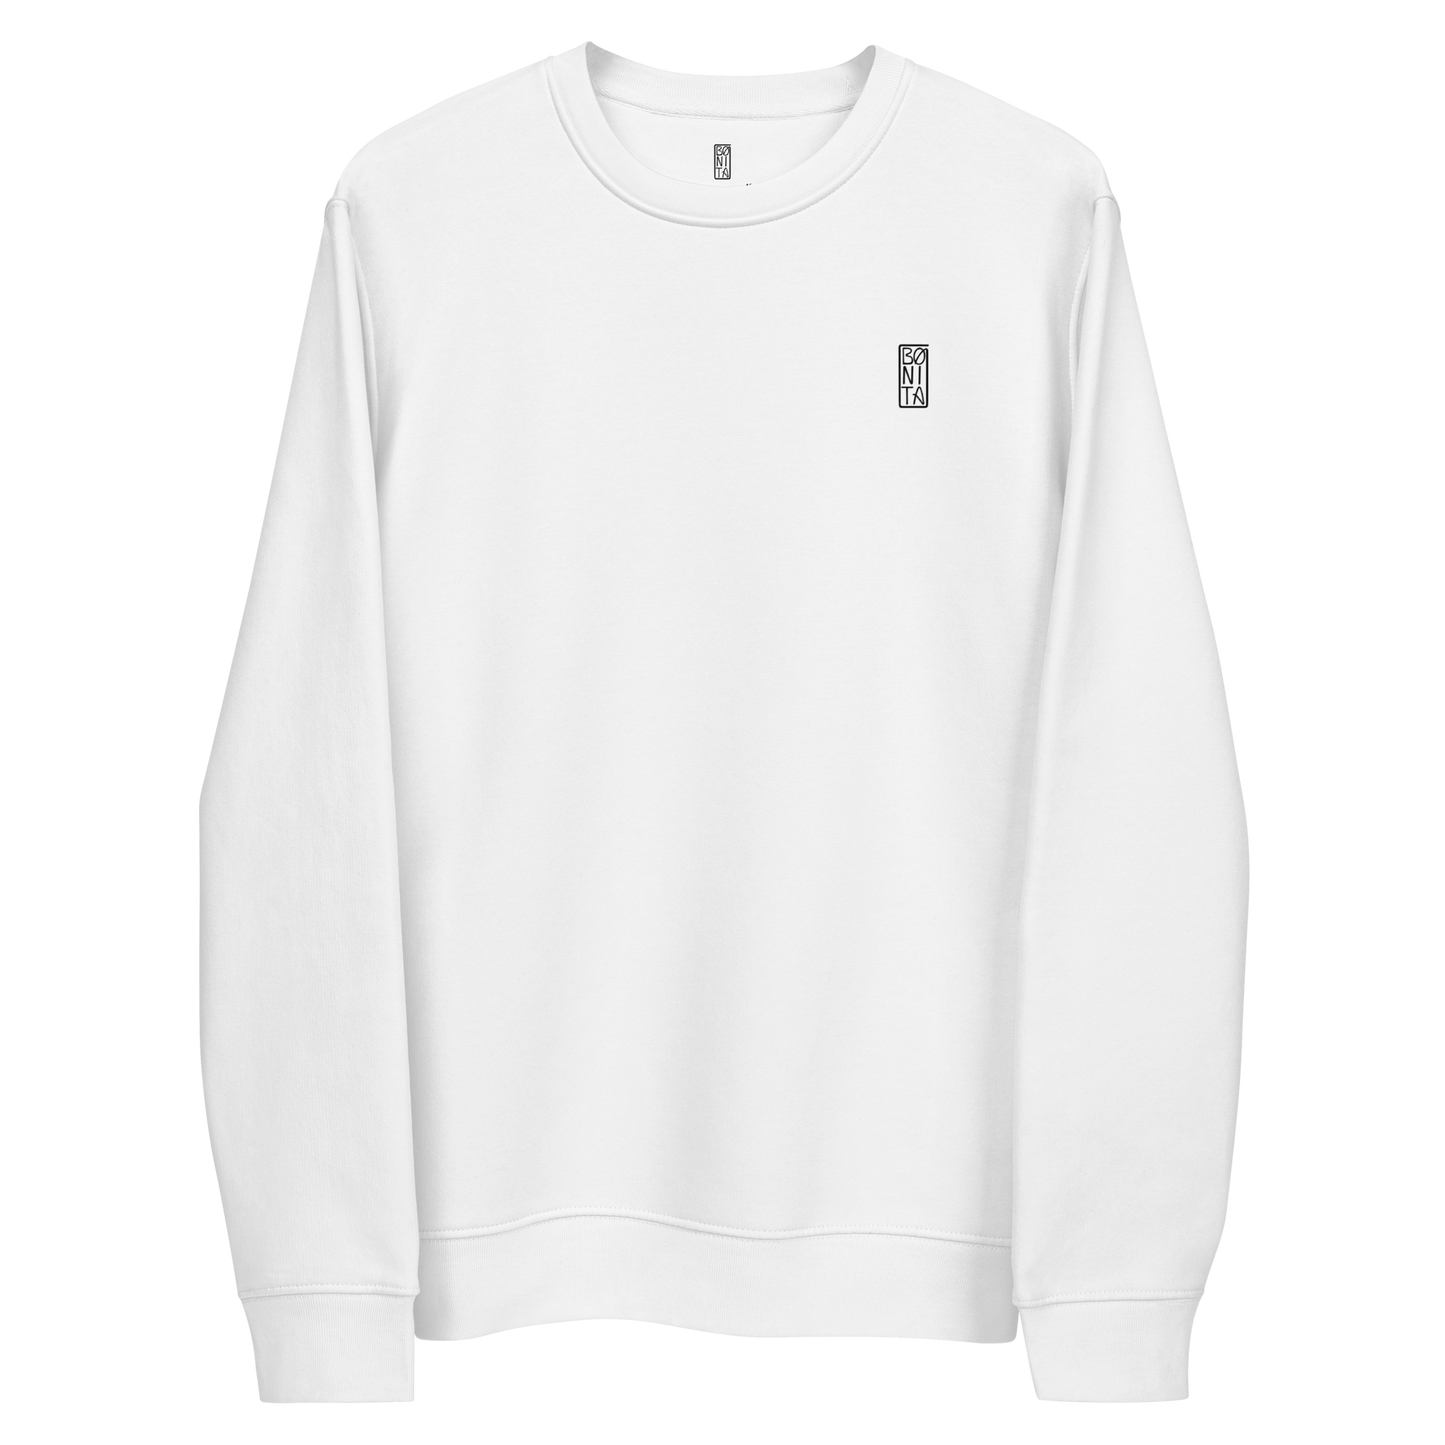 Karleth Orchid Unisex Sweatshirt - White/Black